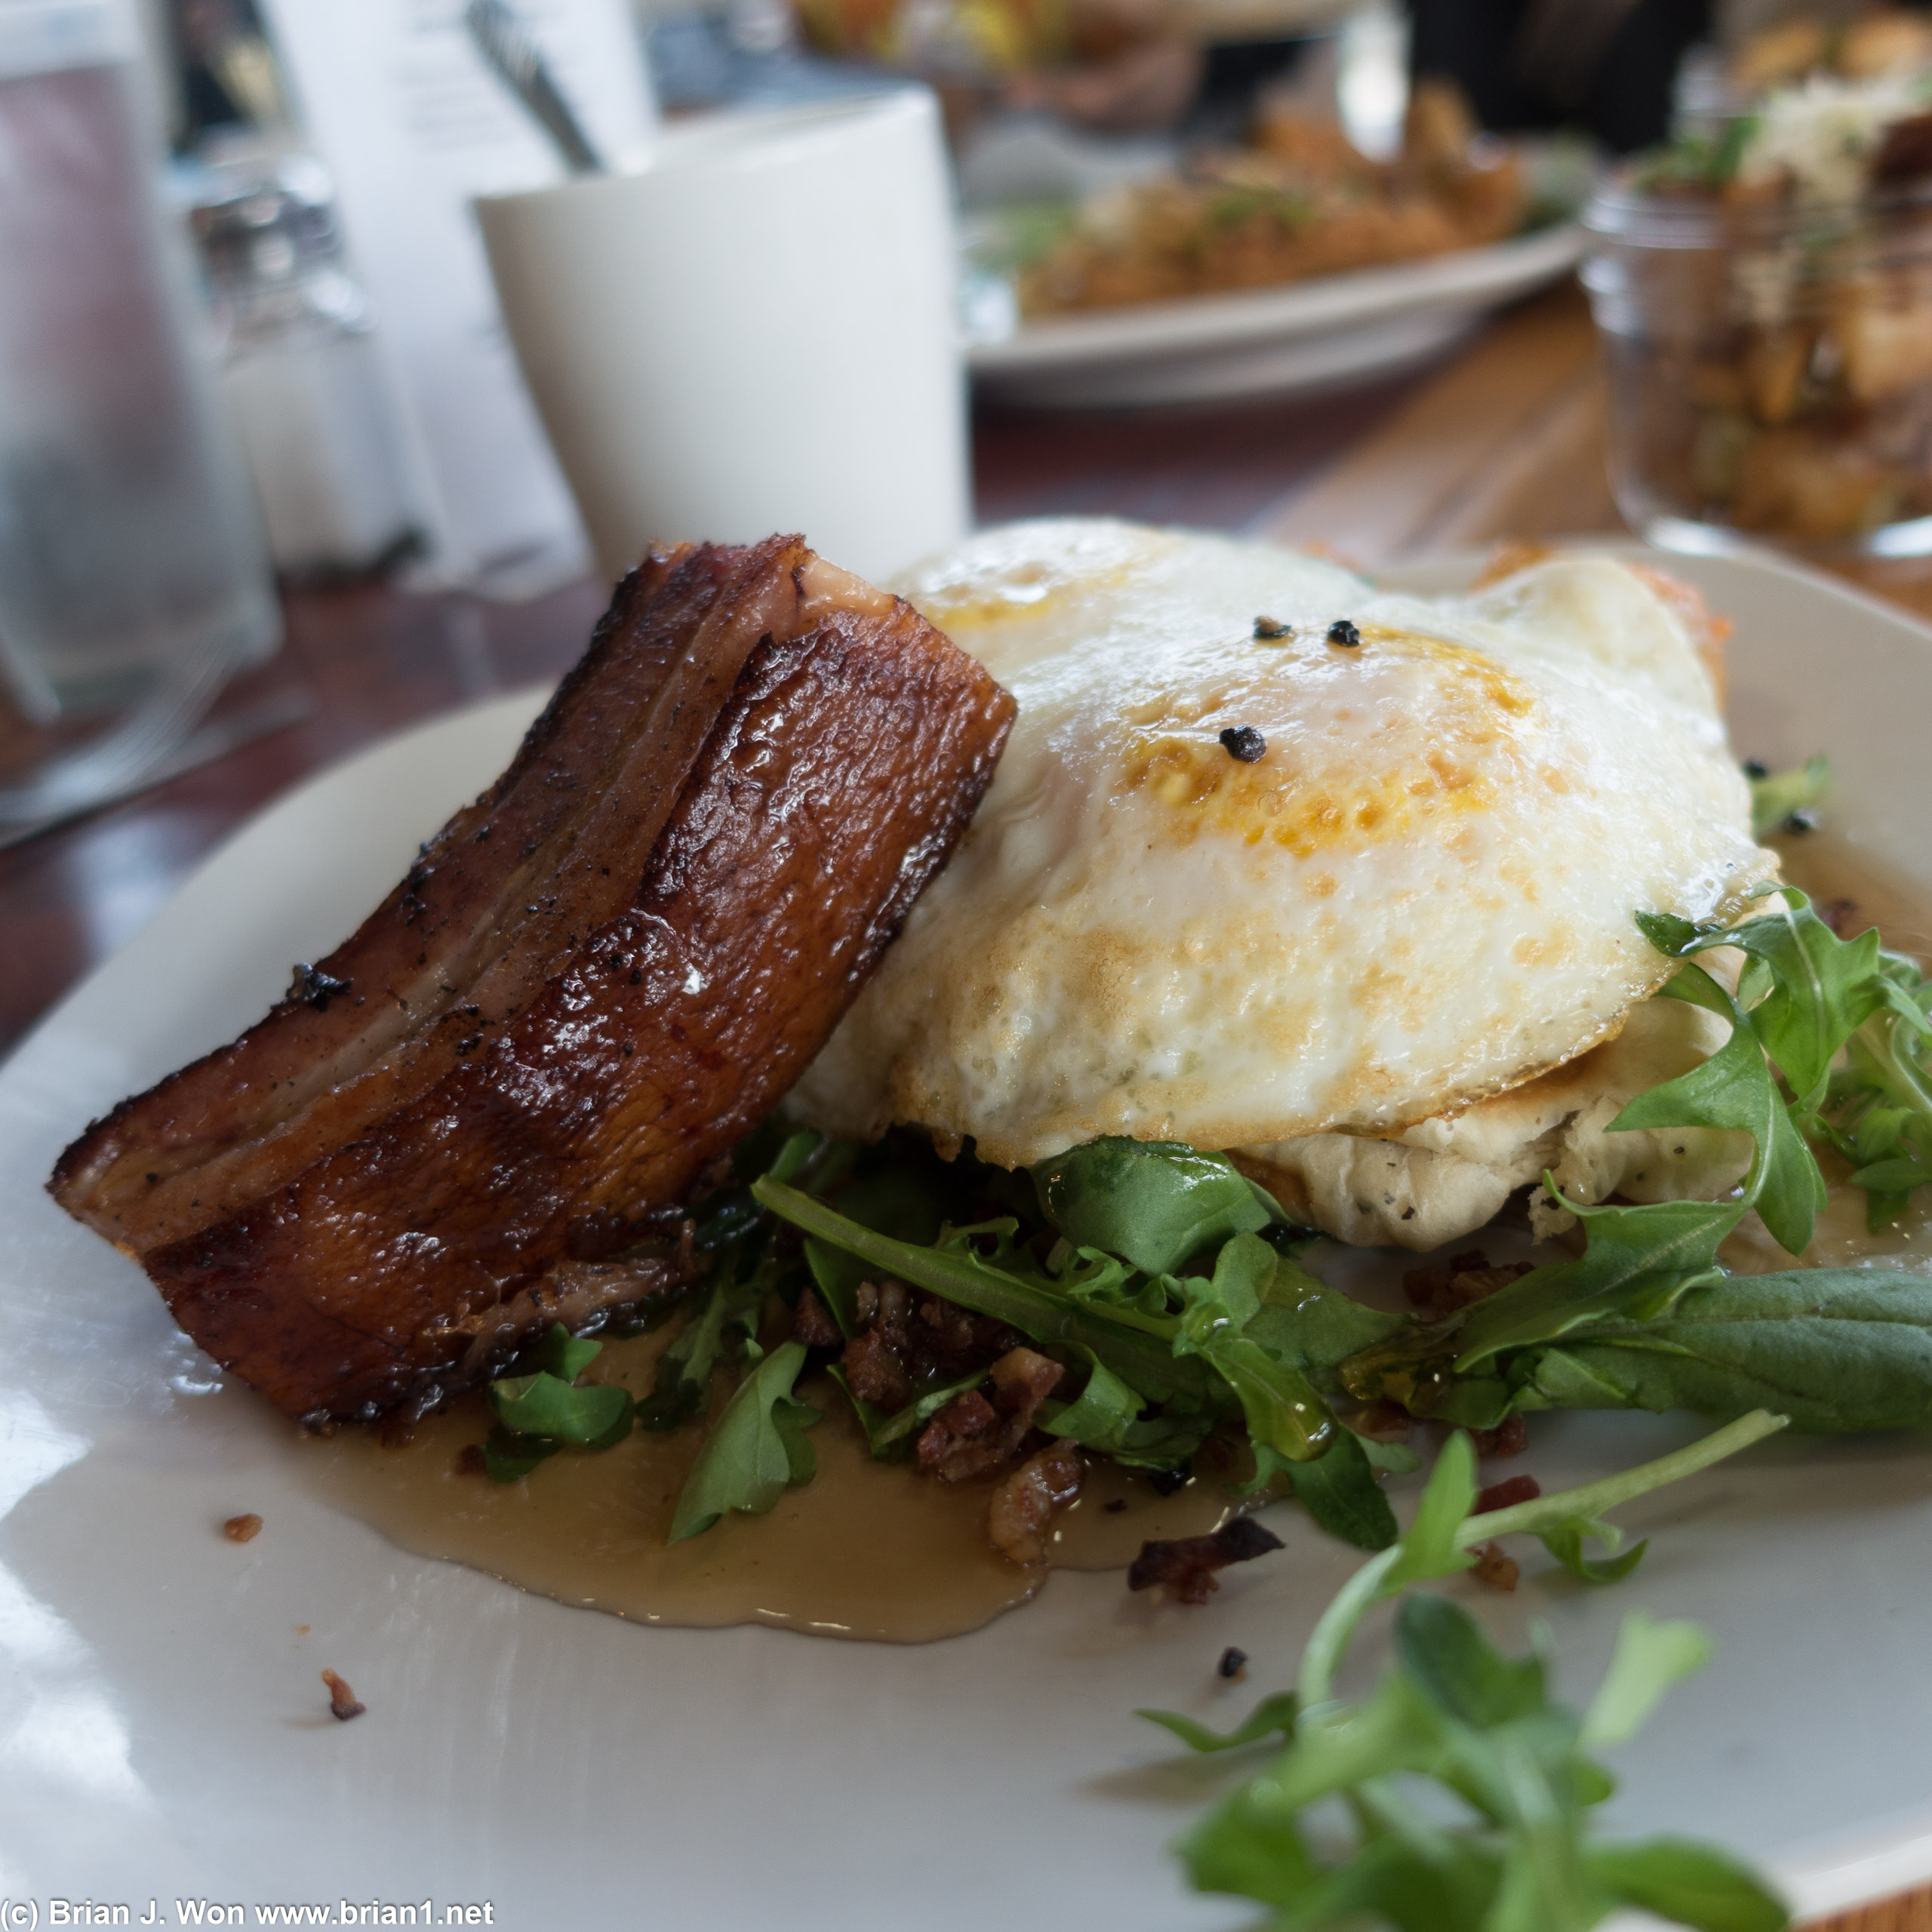 "Da Rudy" - pork belly, egg, arugula atop waffle.